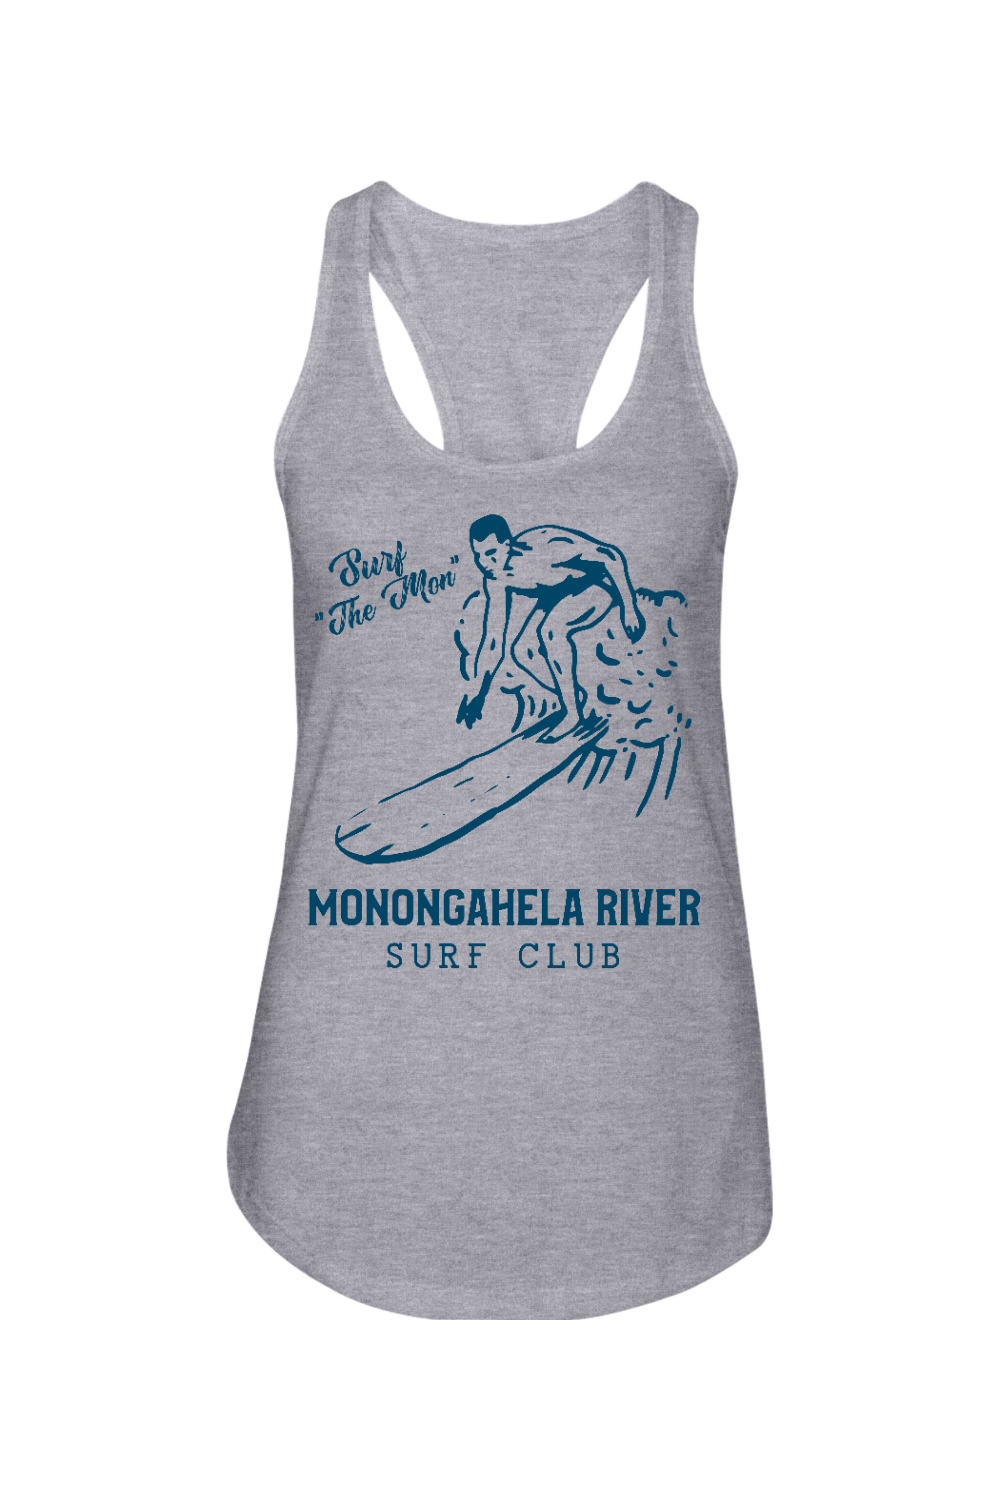 Monongahela River Surf Club - Ladies Racerback Tank - Yinzylvania